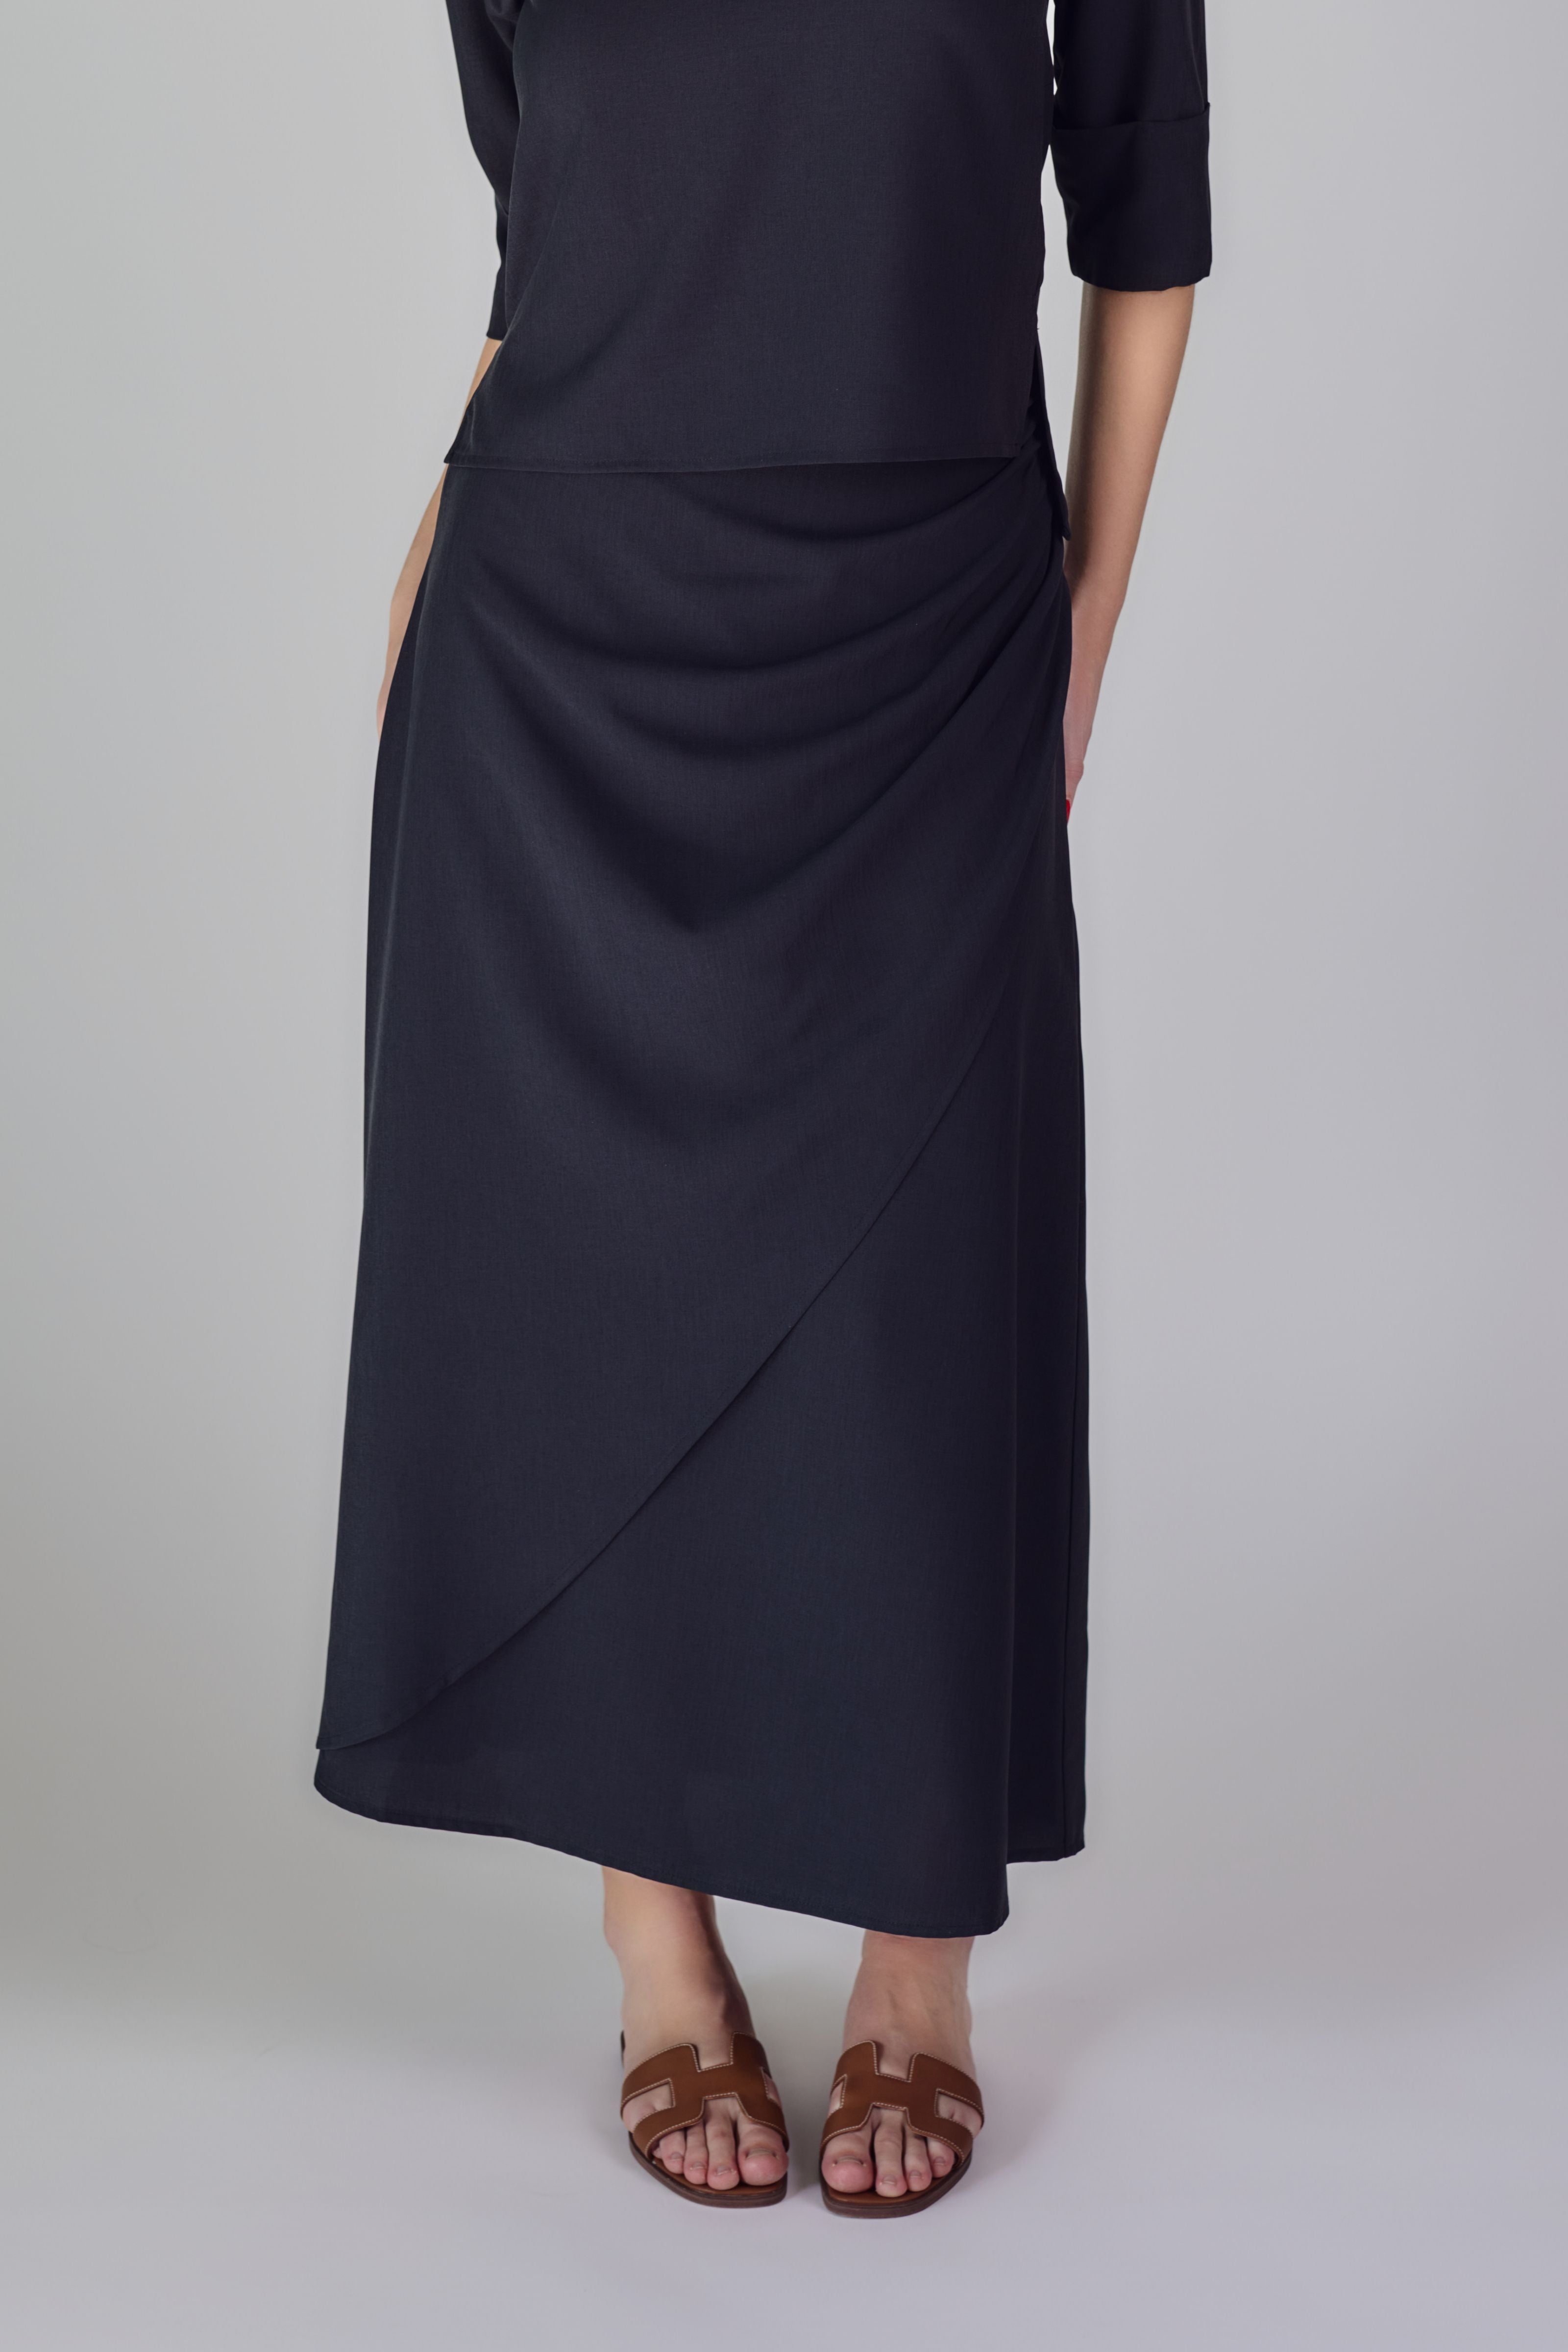 Tulum Wrap Skirt - Black - Olivvi World